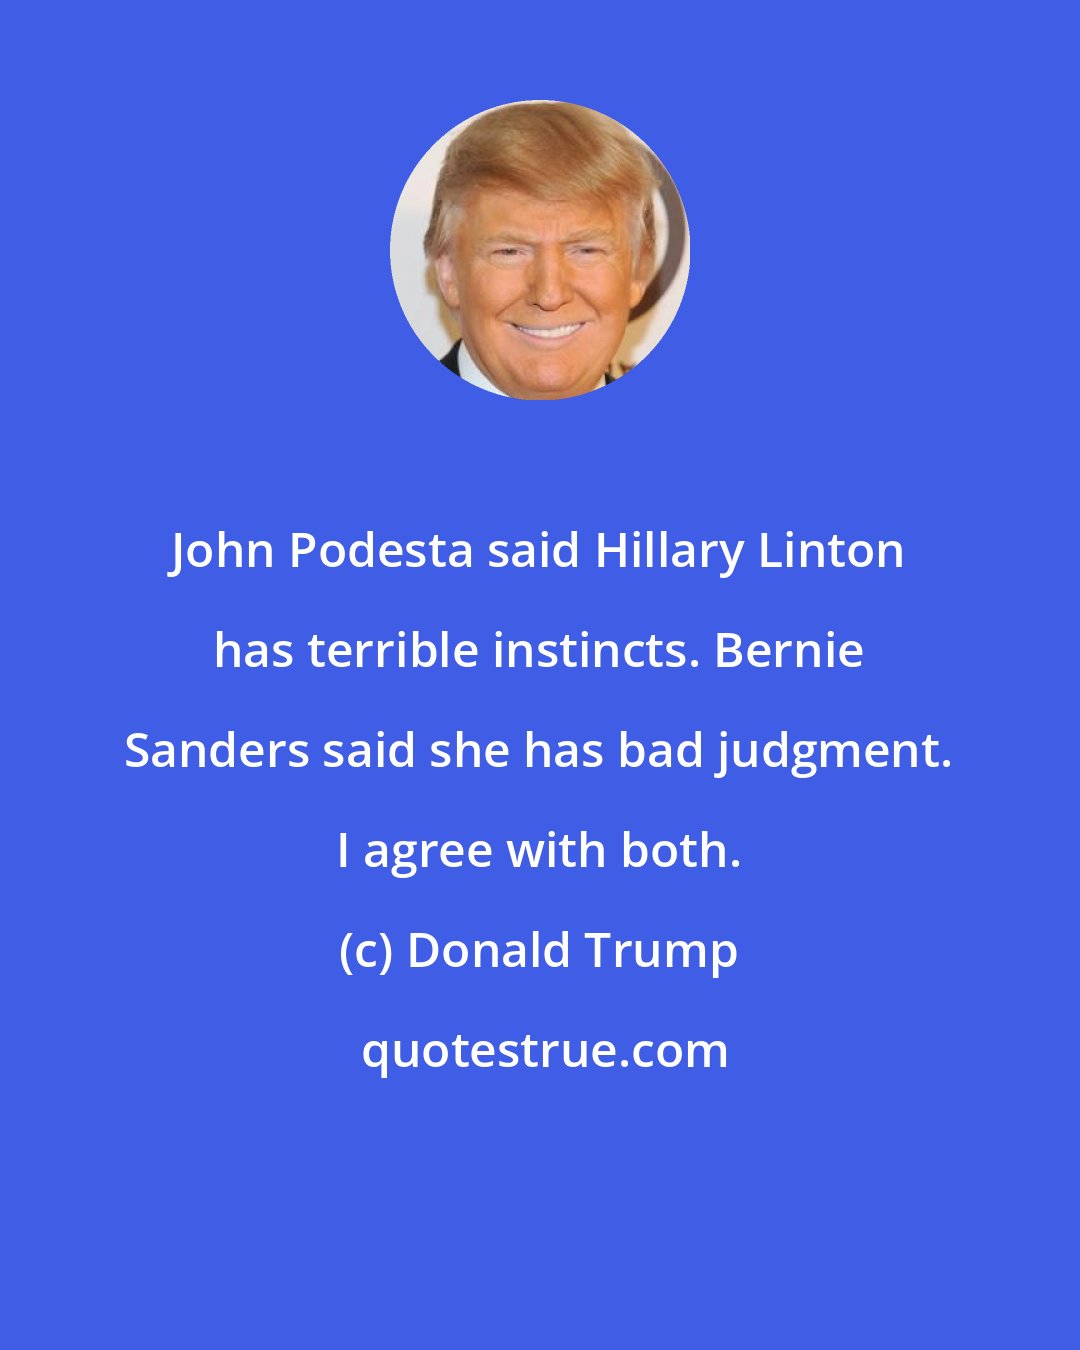 Donald Trump: John Podesta said Hillary Linton has terrible instincts. Bernie Sanders said she has bad judgment. I agree with both.